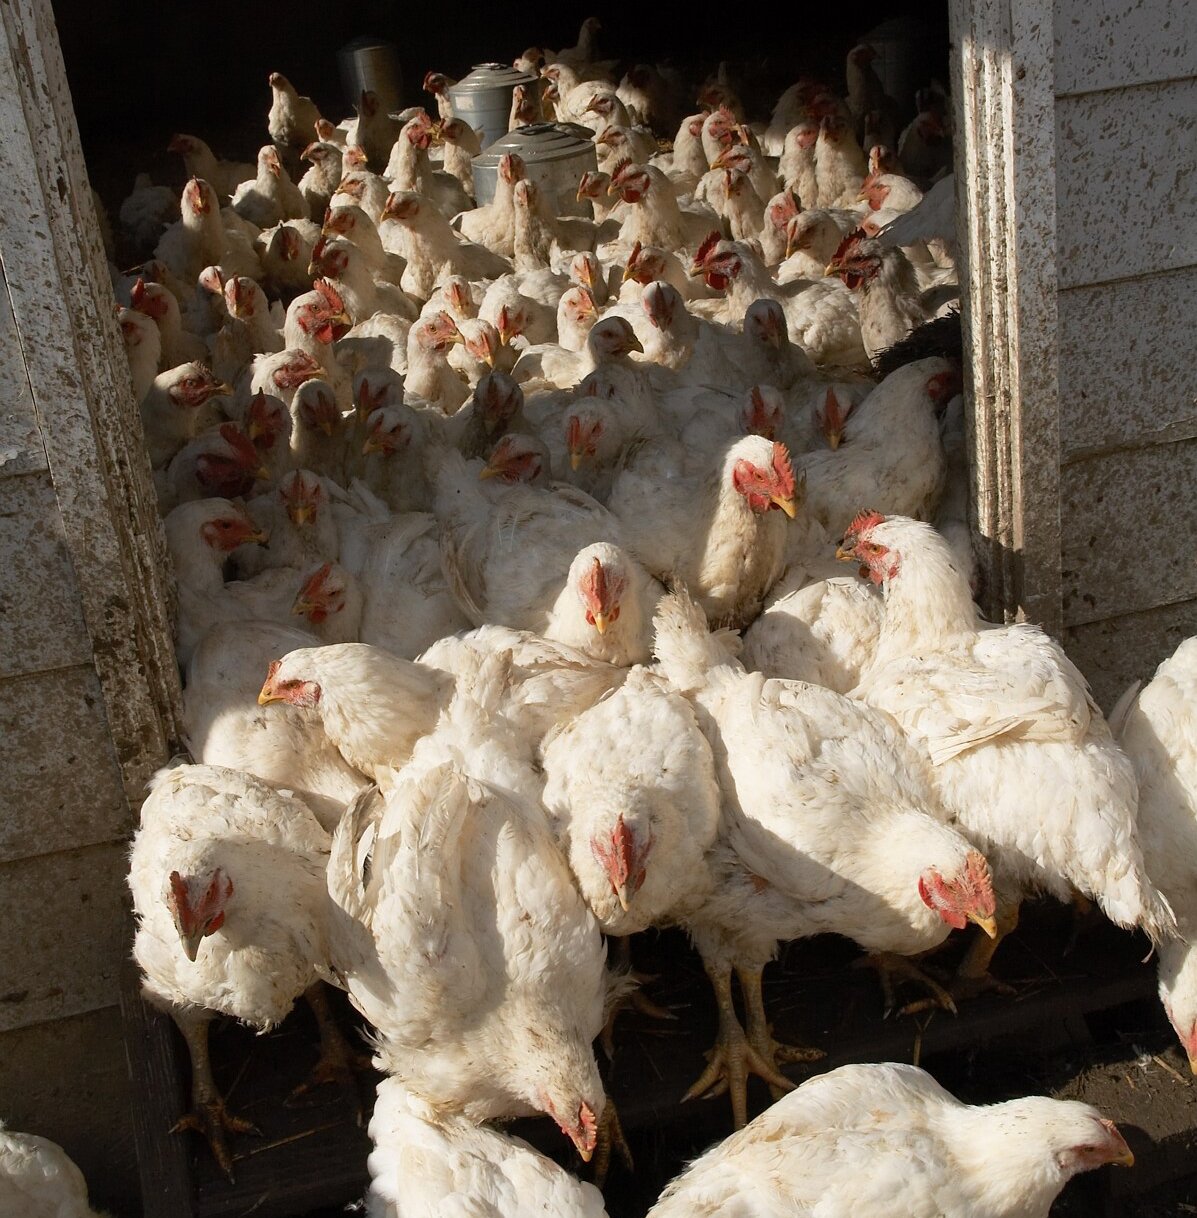 Chickens from Farm Sanctuary's Hurricane Katrina Rescue.